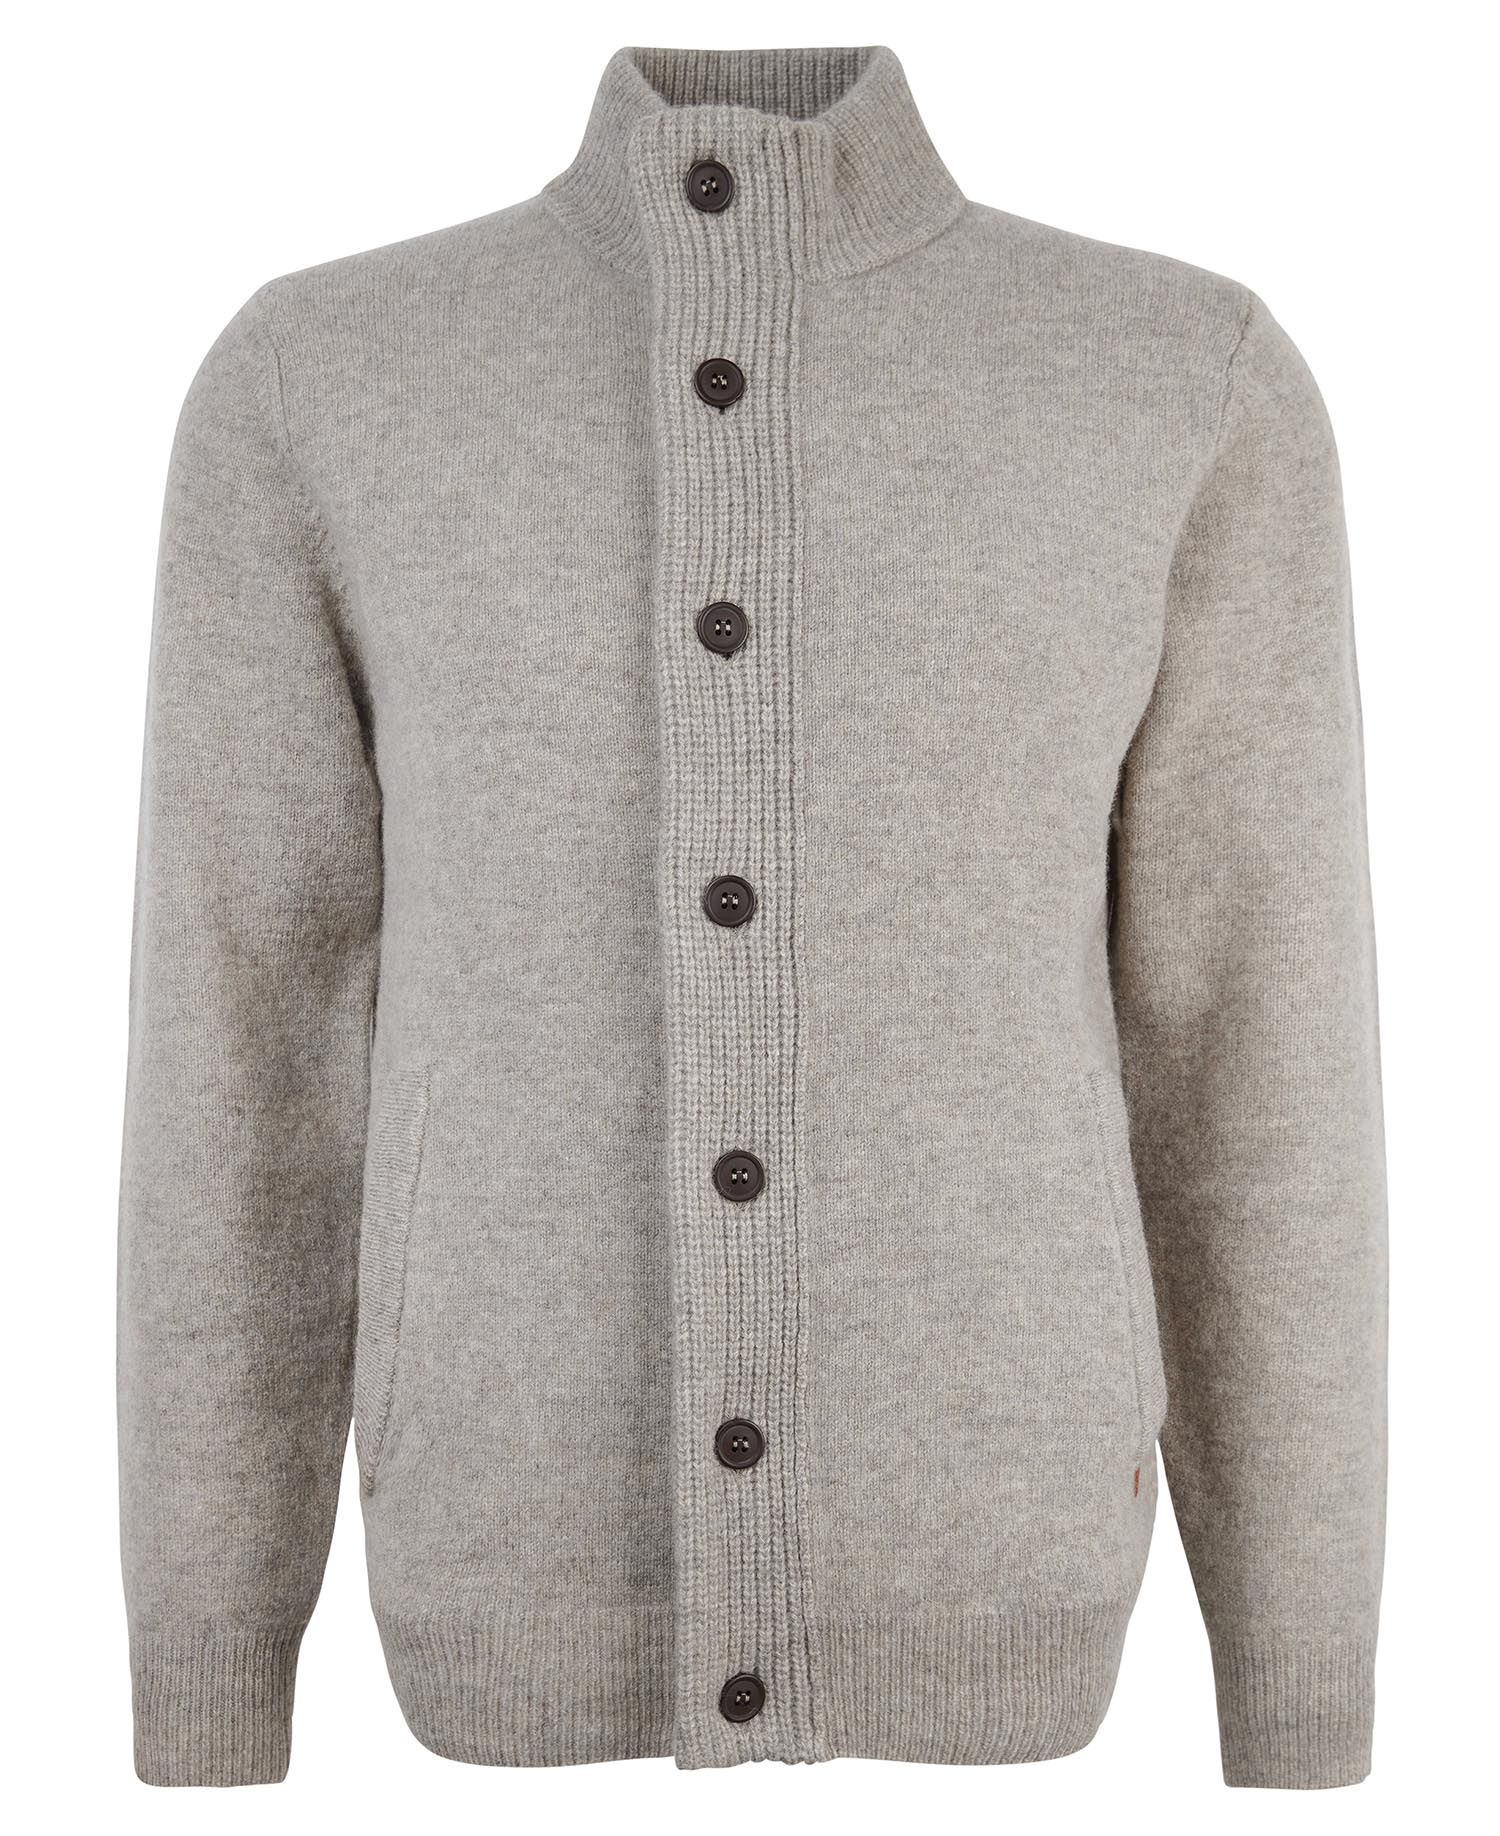 BARBOUR Men's Essential Patch Zip Sweater New Stone